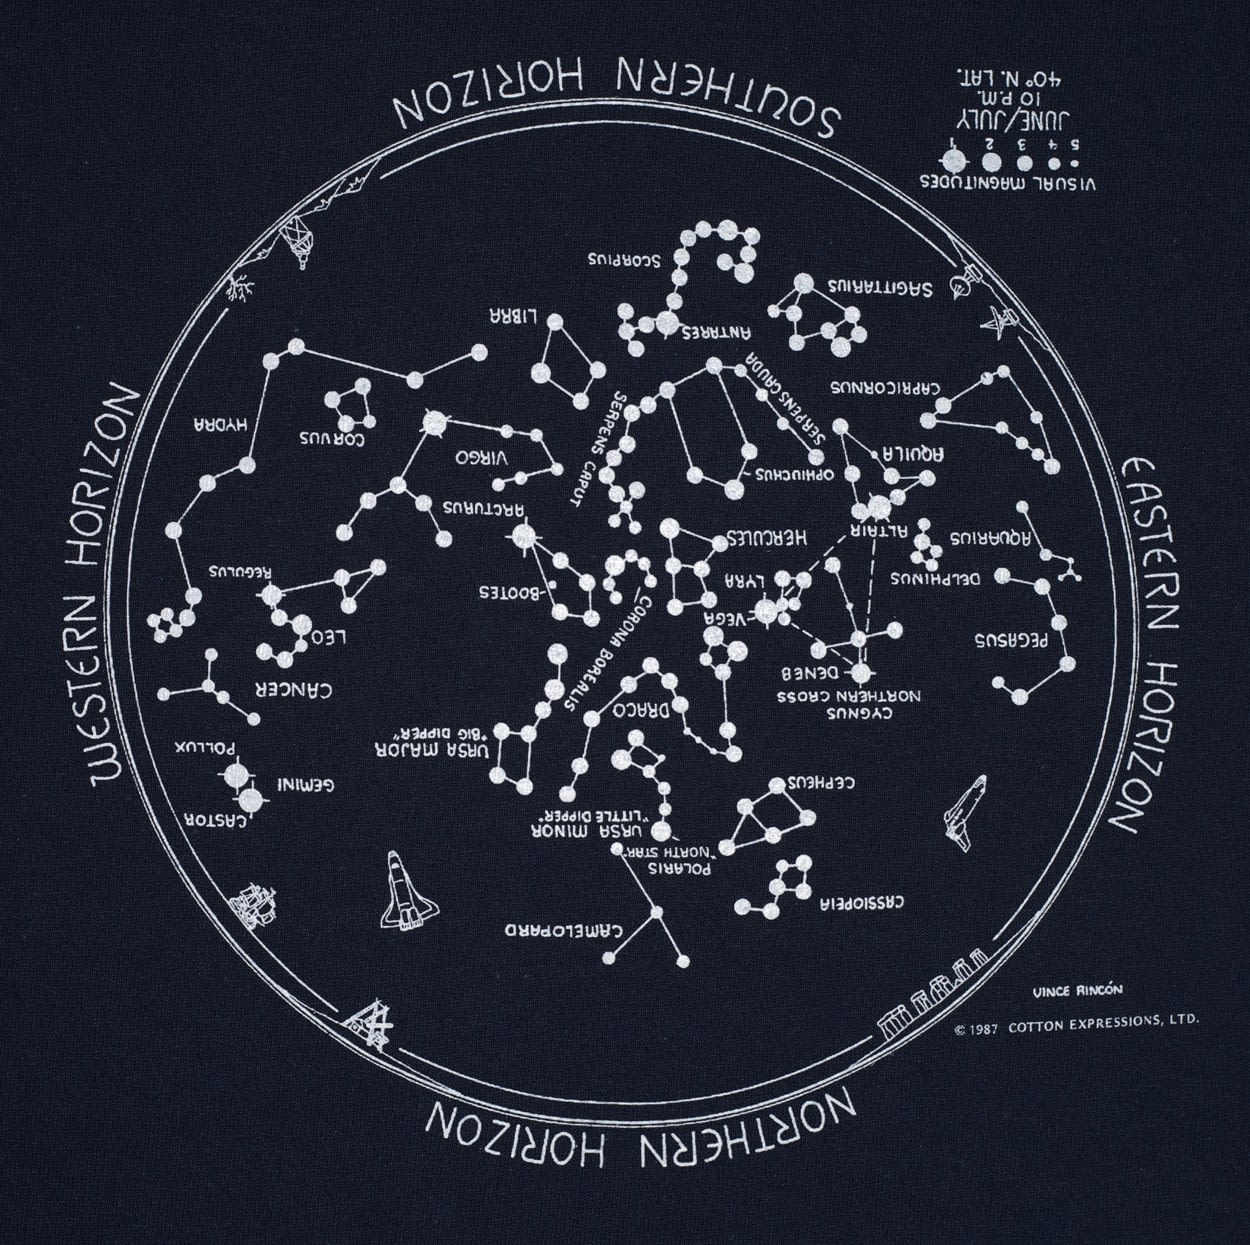 Space Shirt Nasa T Shirt Night Sky Print Glow-in-the-Dark Youth Shirt Star Chart T Shirt Science Print